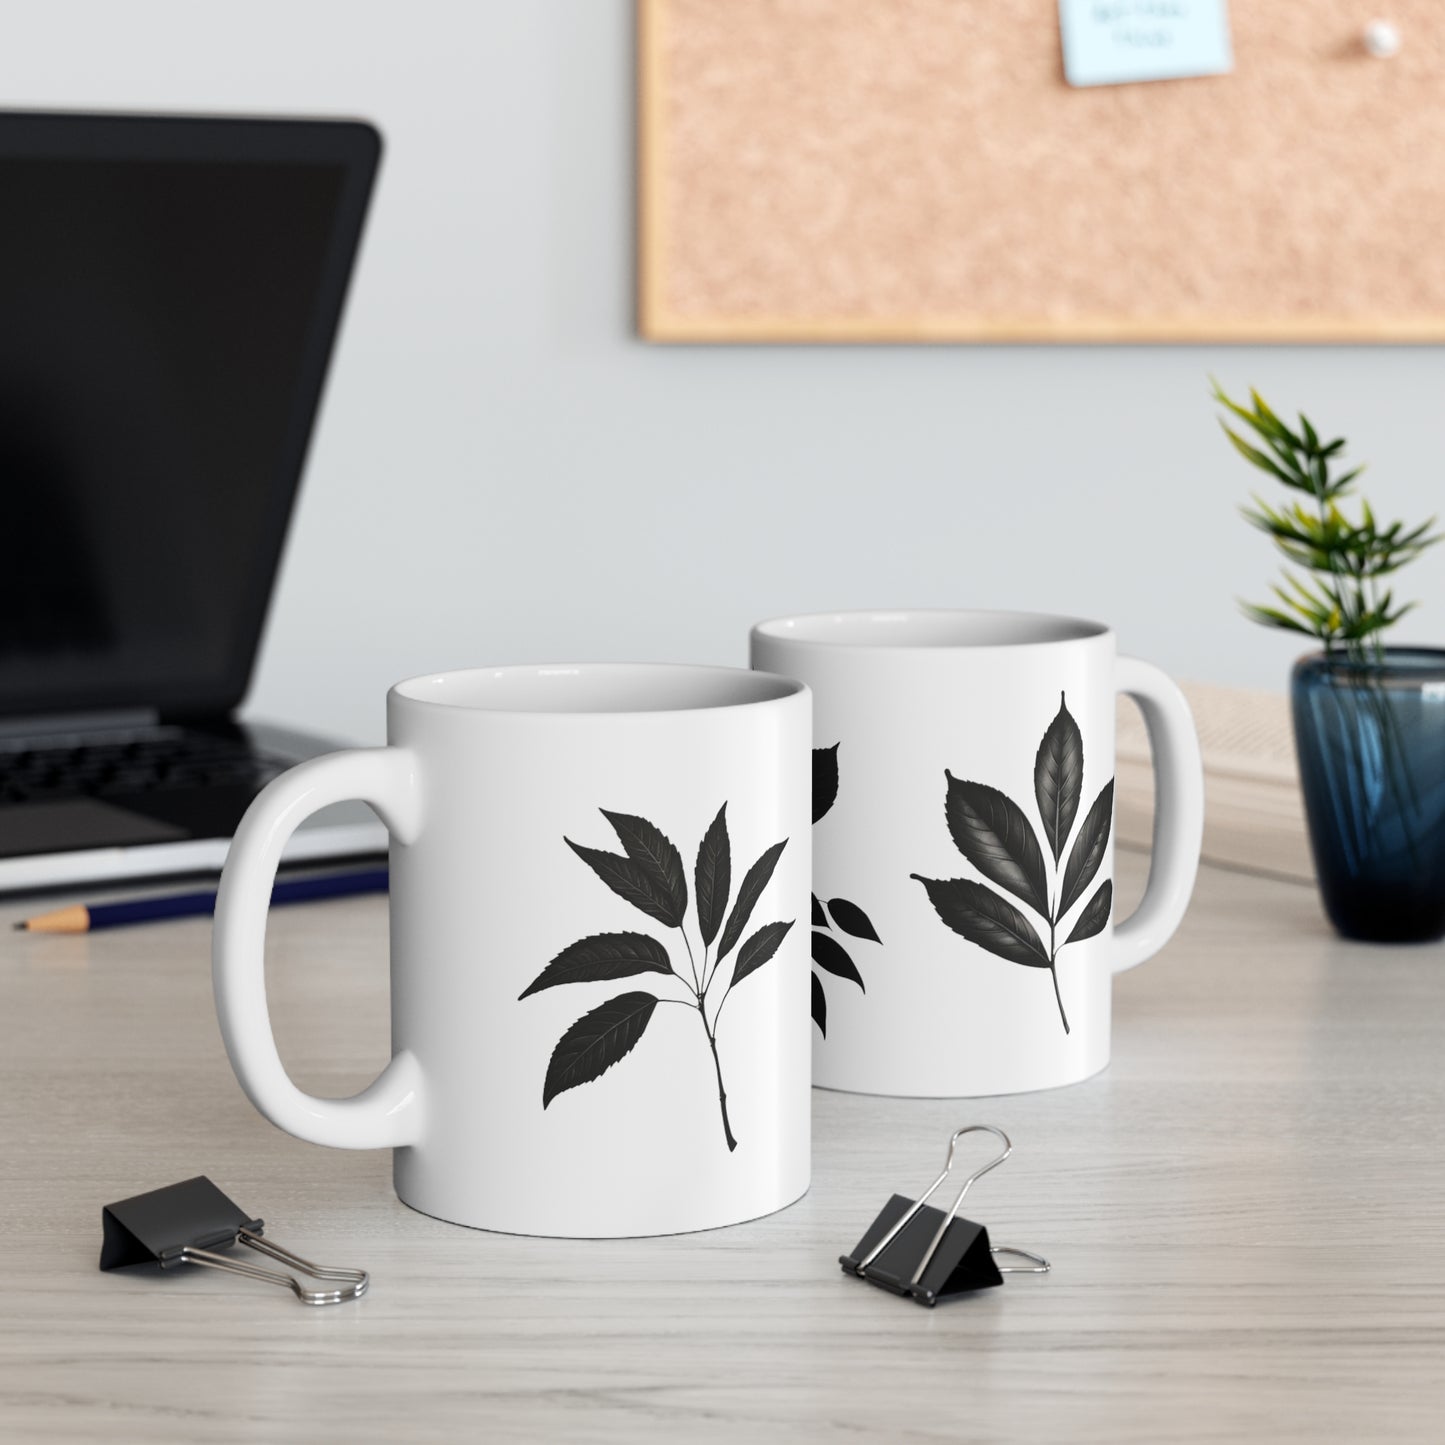 Black and White Ash Leaf Mug - Ceramic Coffee Mug 11oz